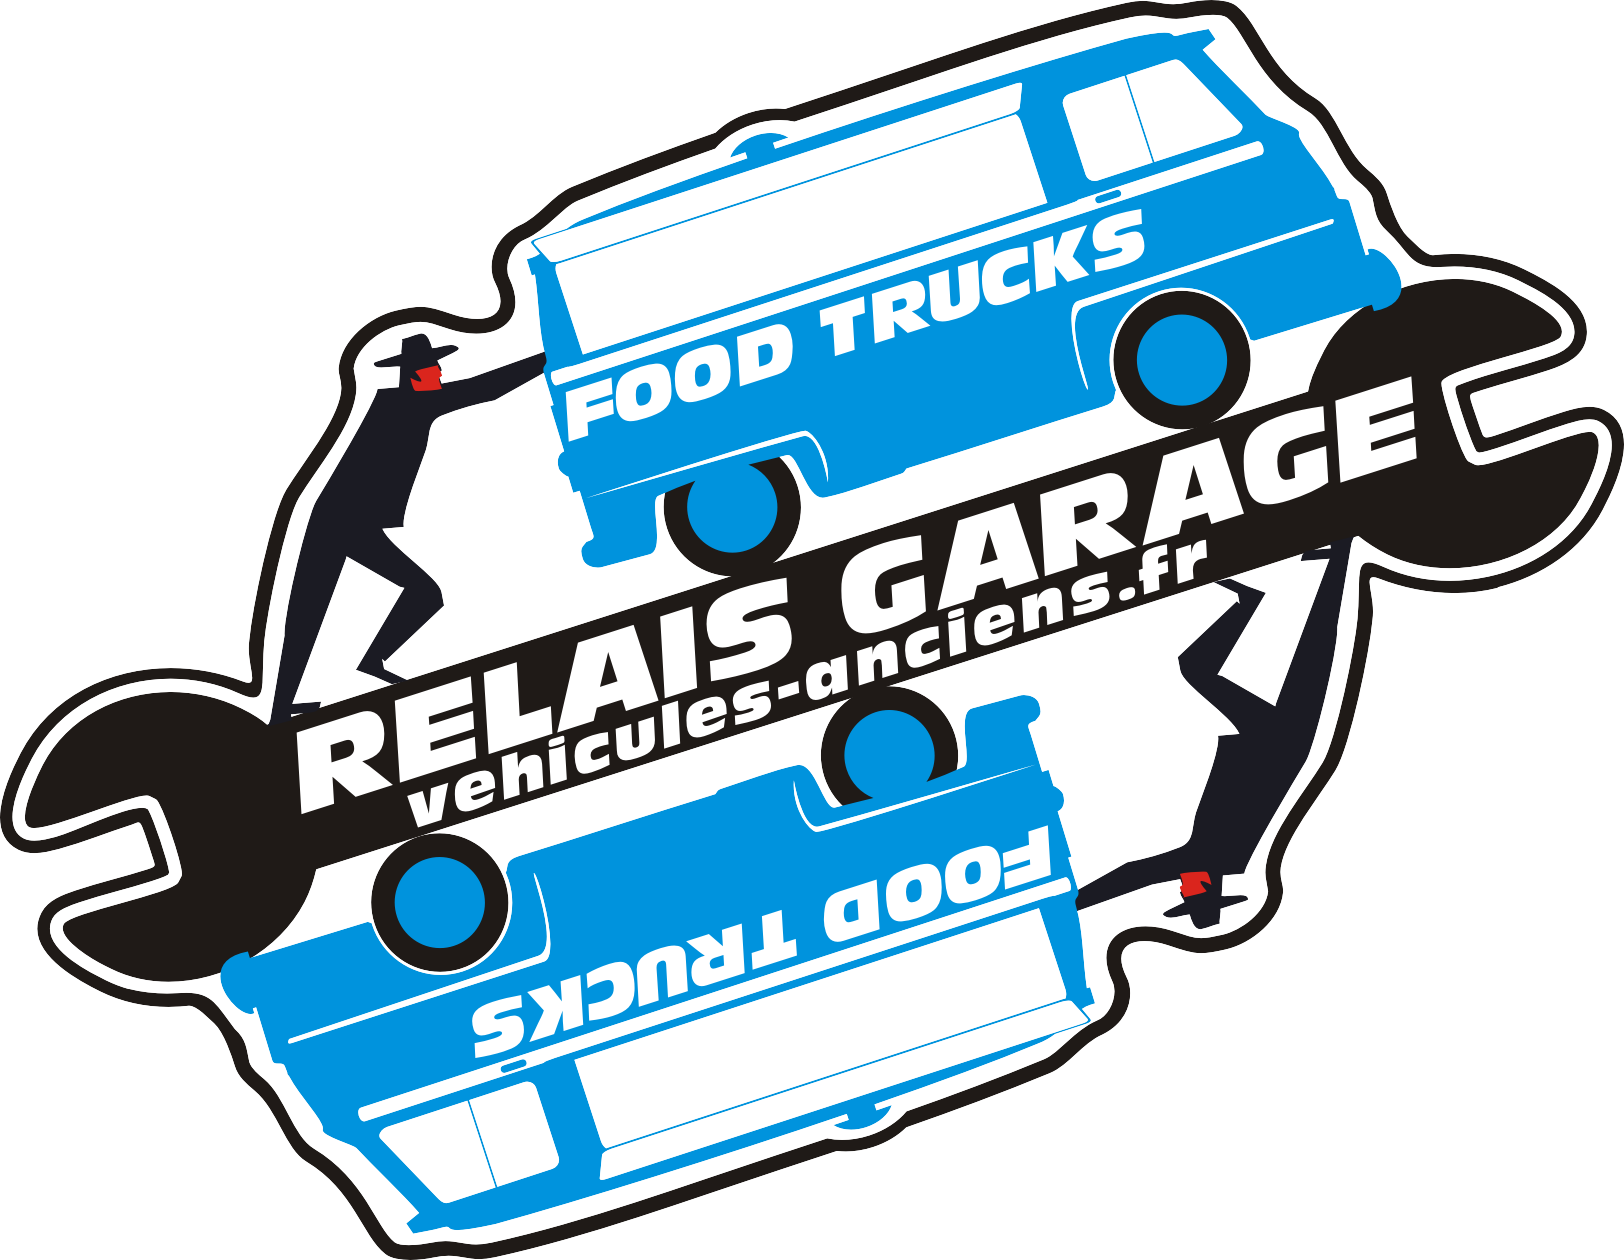 Relais garage Estafette Food Trucks